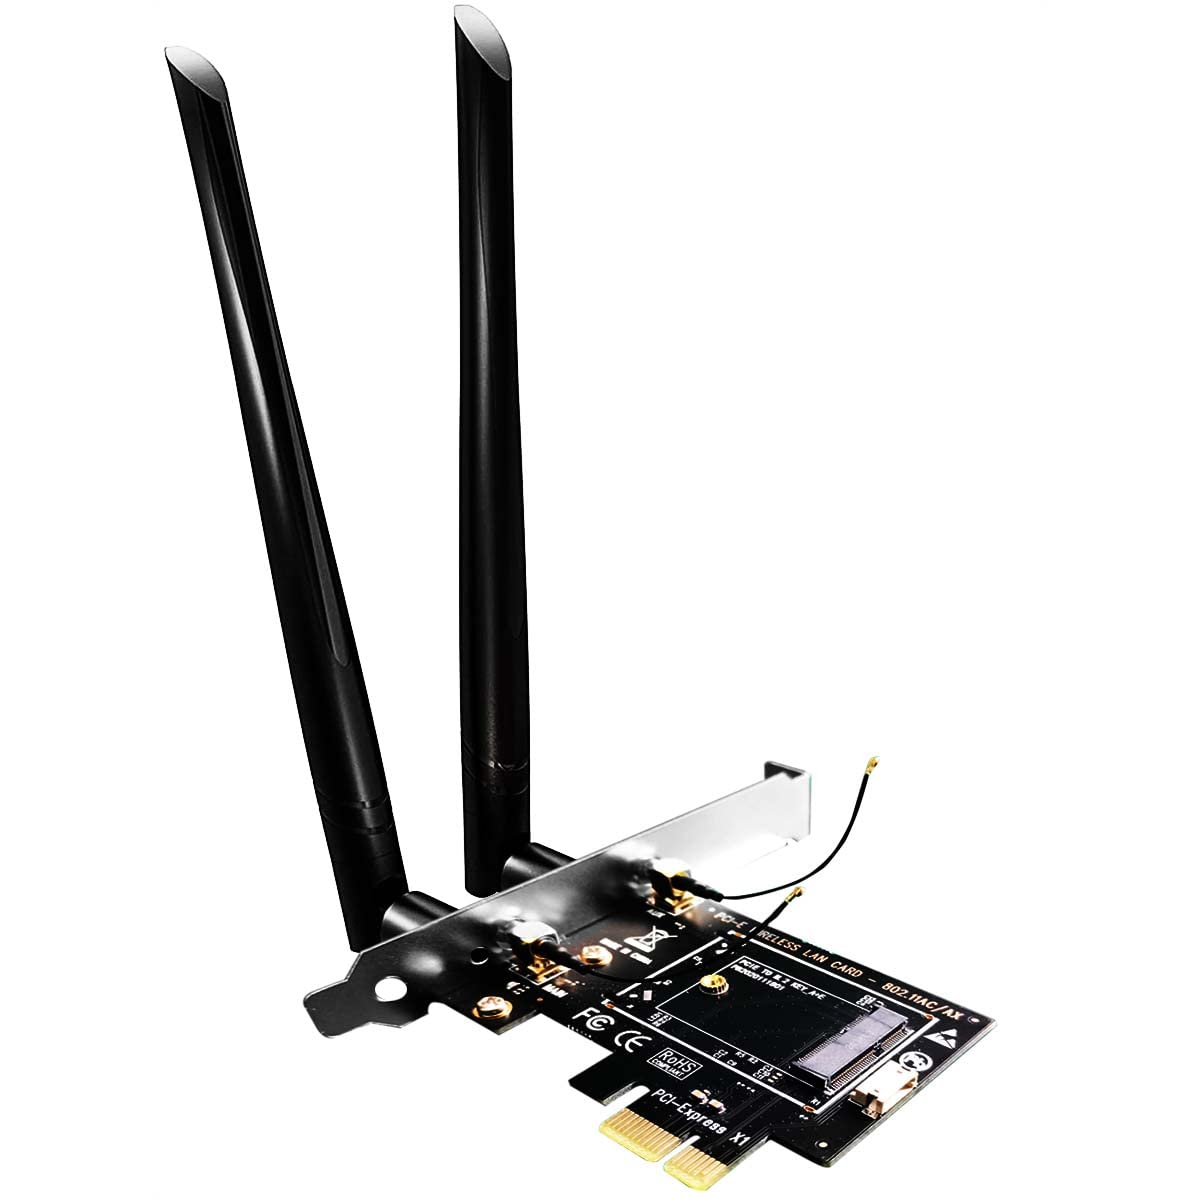 GLOTRENDS M.2 E Key - PCIe X1 WiFiアダプタ、M.2 WiFiモジュール用、6 dBi SMAアンテナ付属